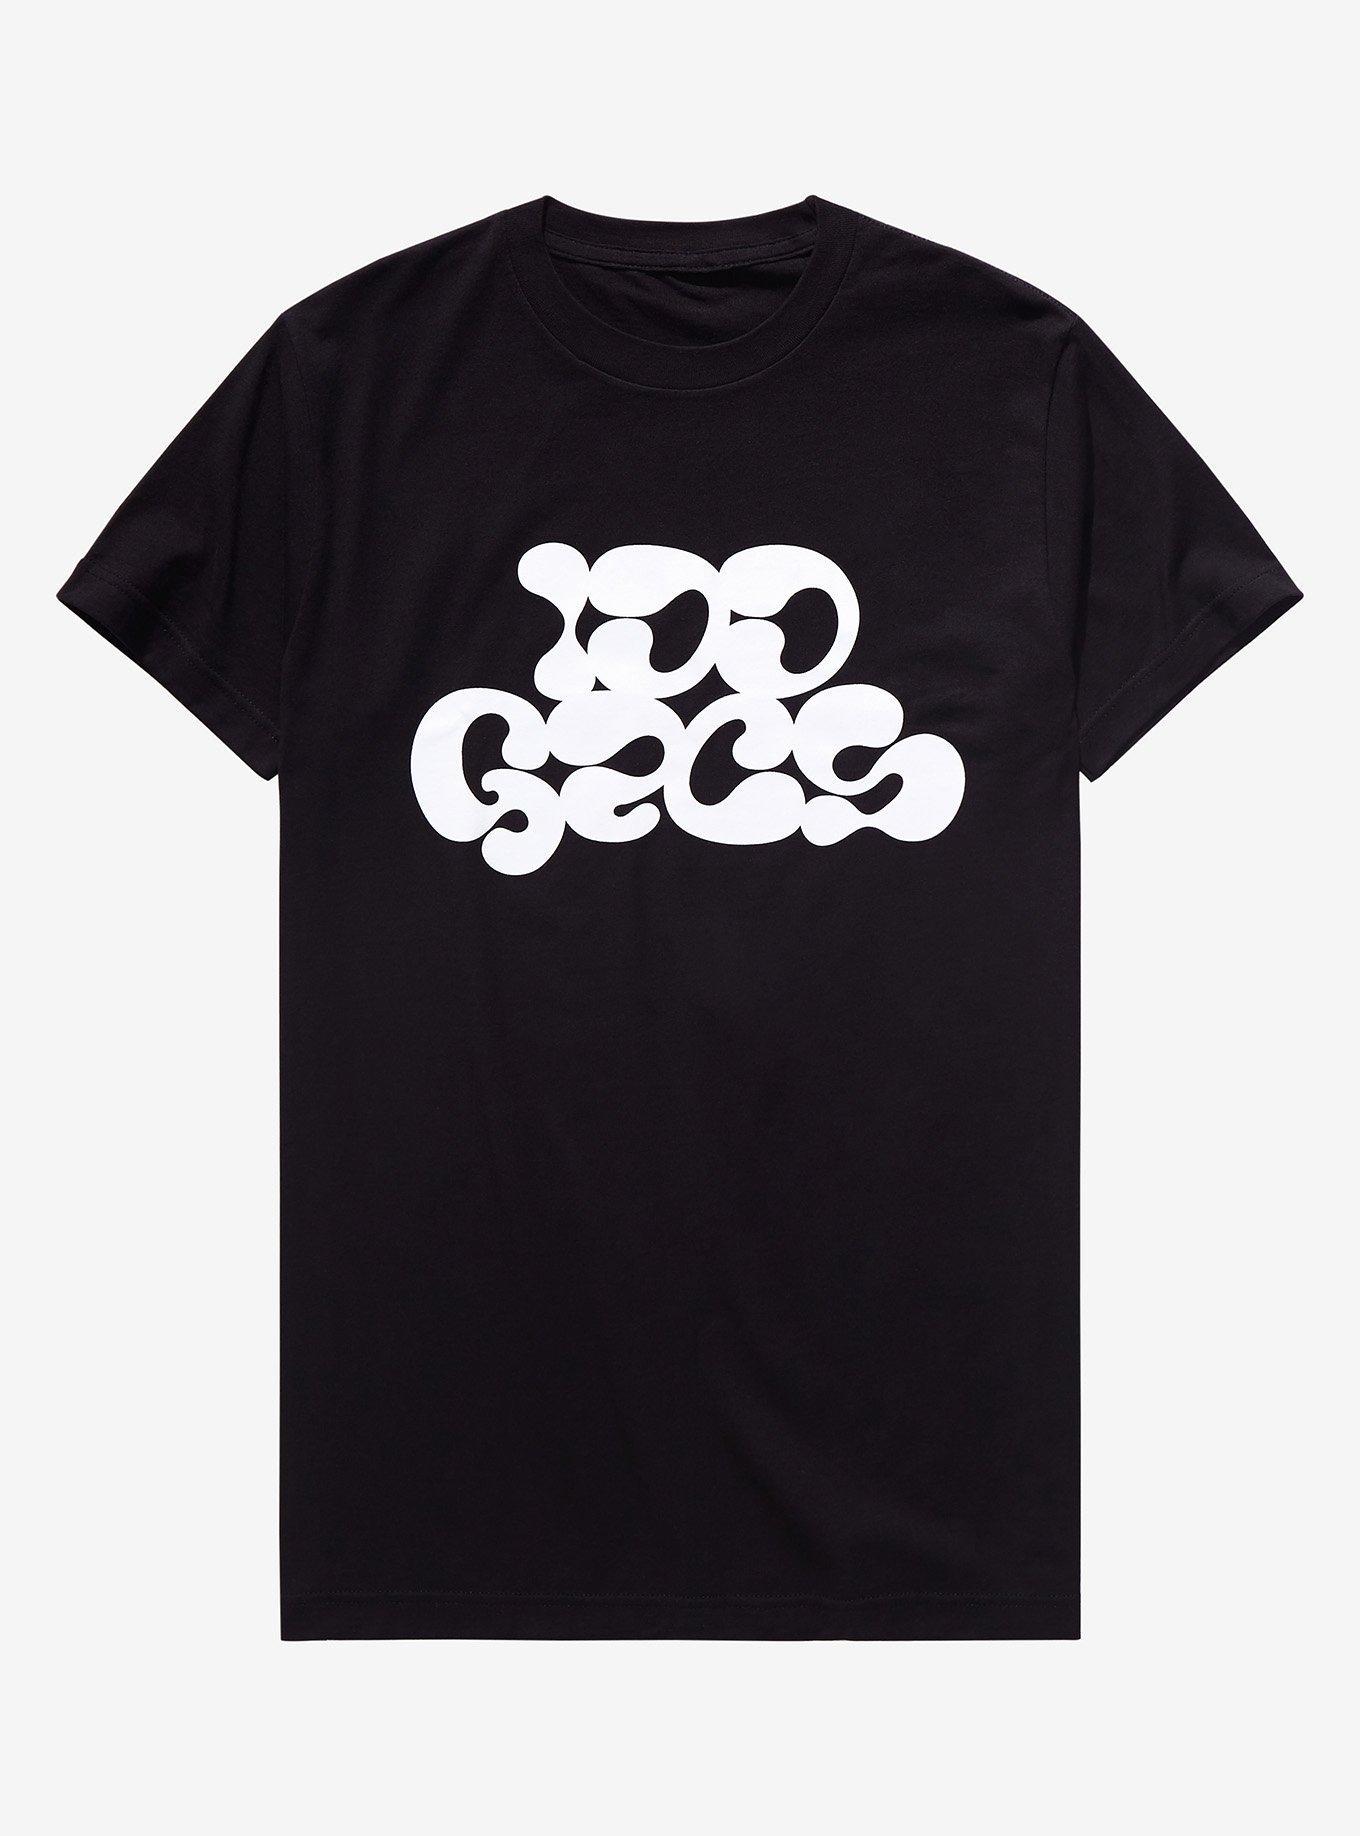 100 Gecs Logo T-Shirt | Hot Topic